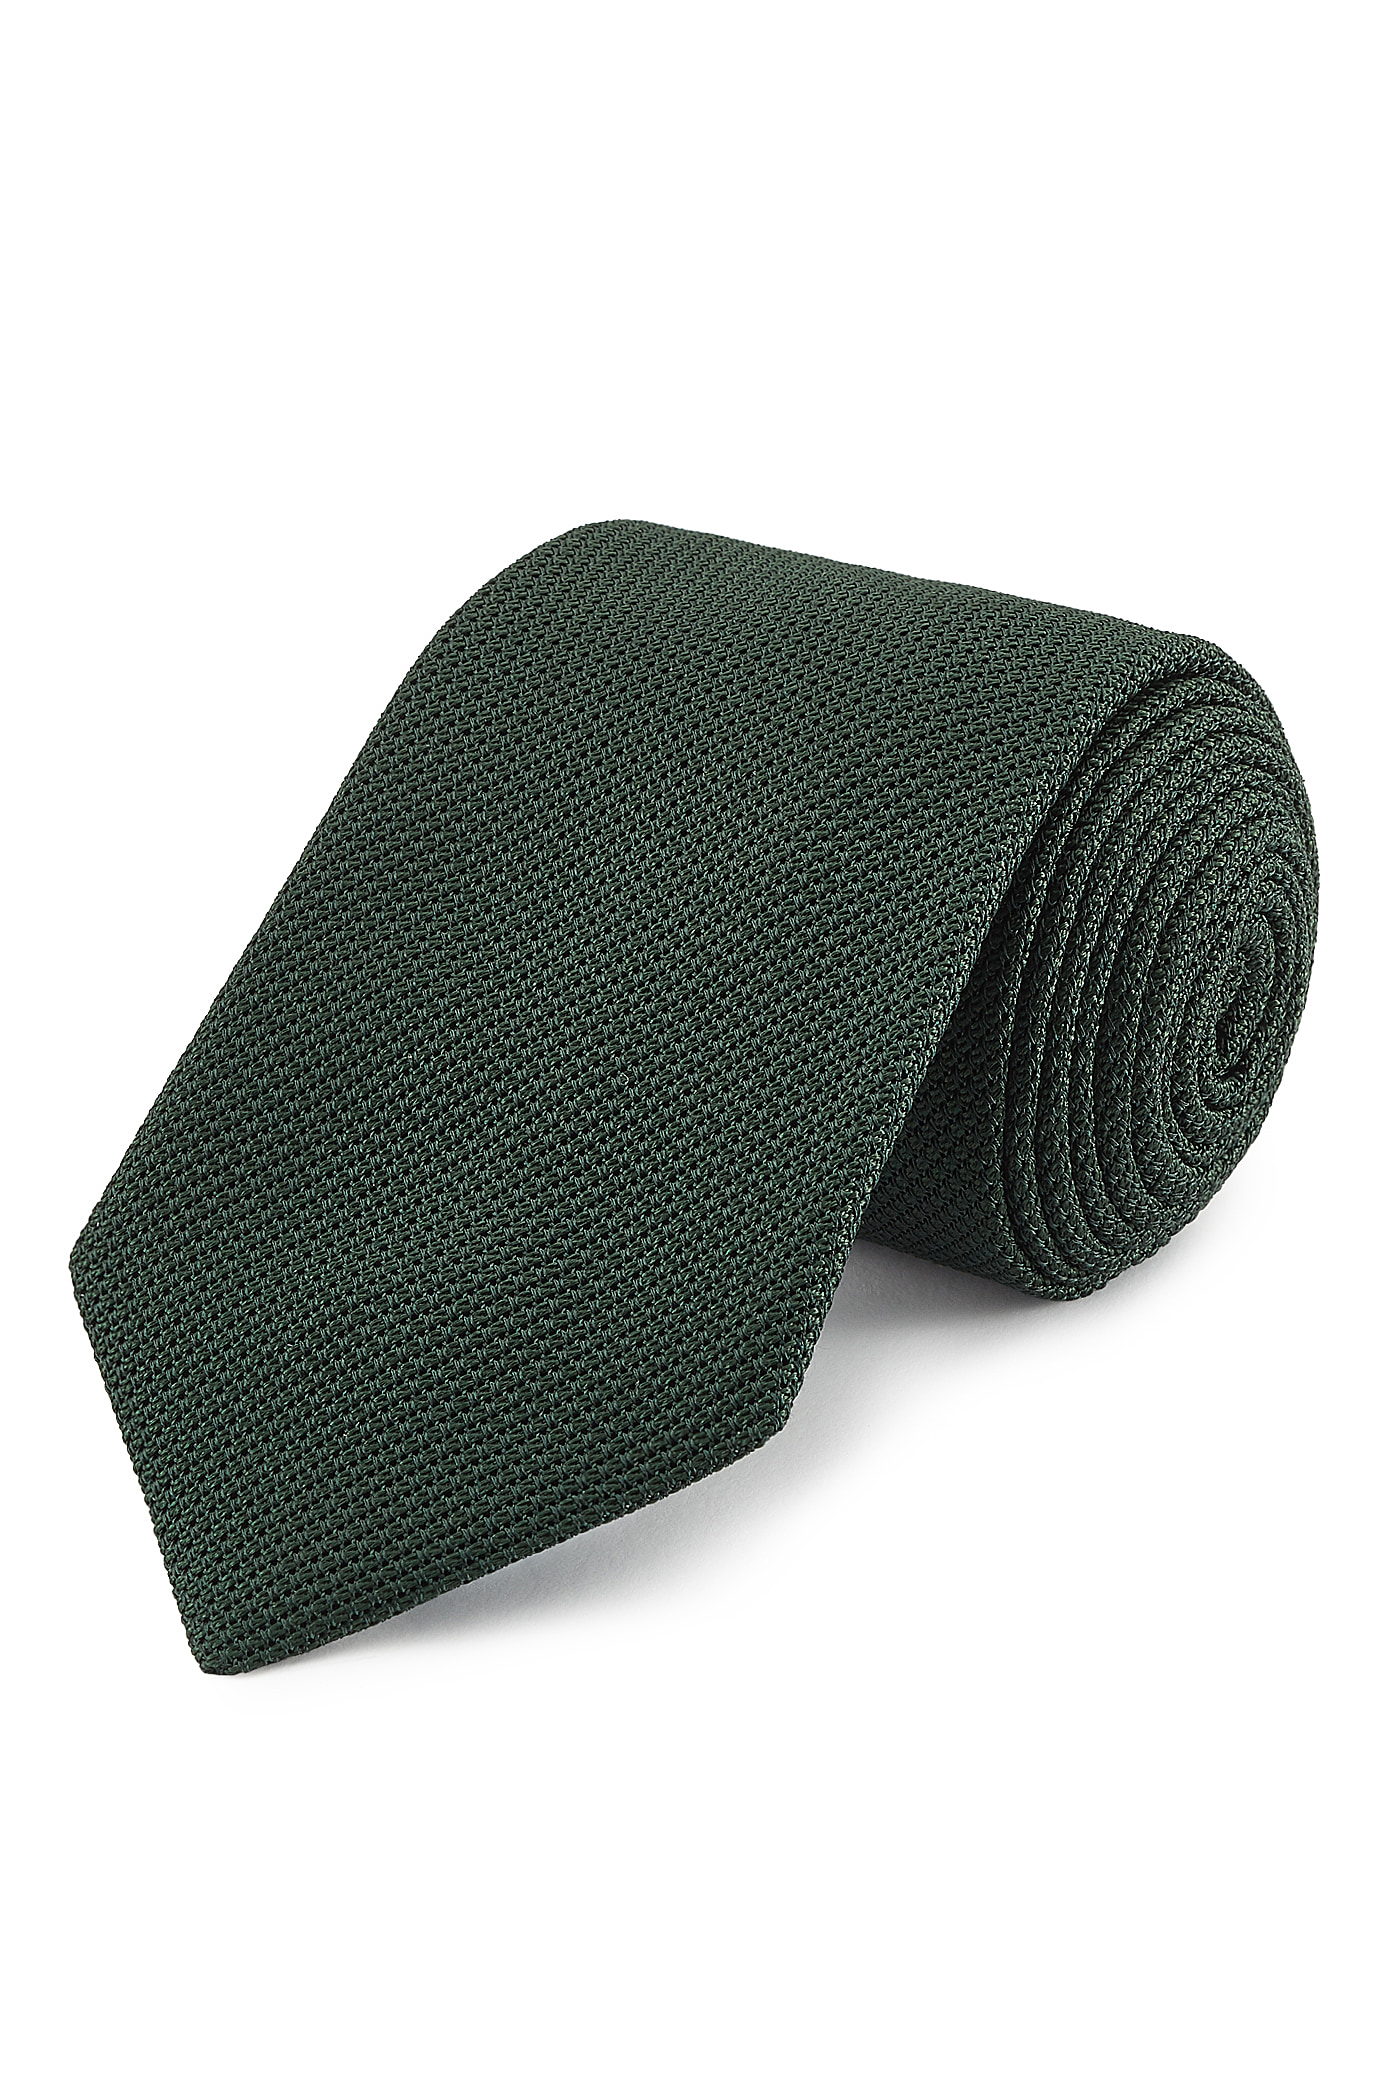 Green Grenadine Small Weave Tie | New & Lingwood